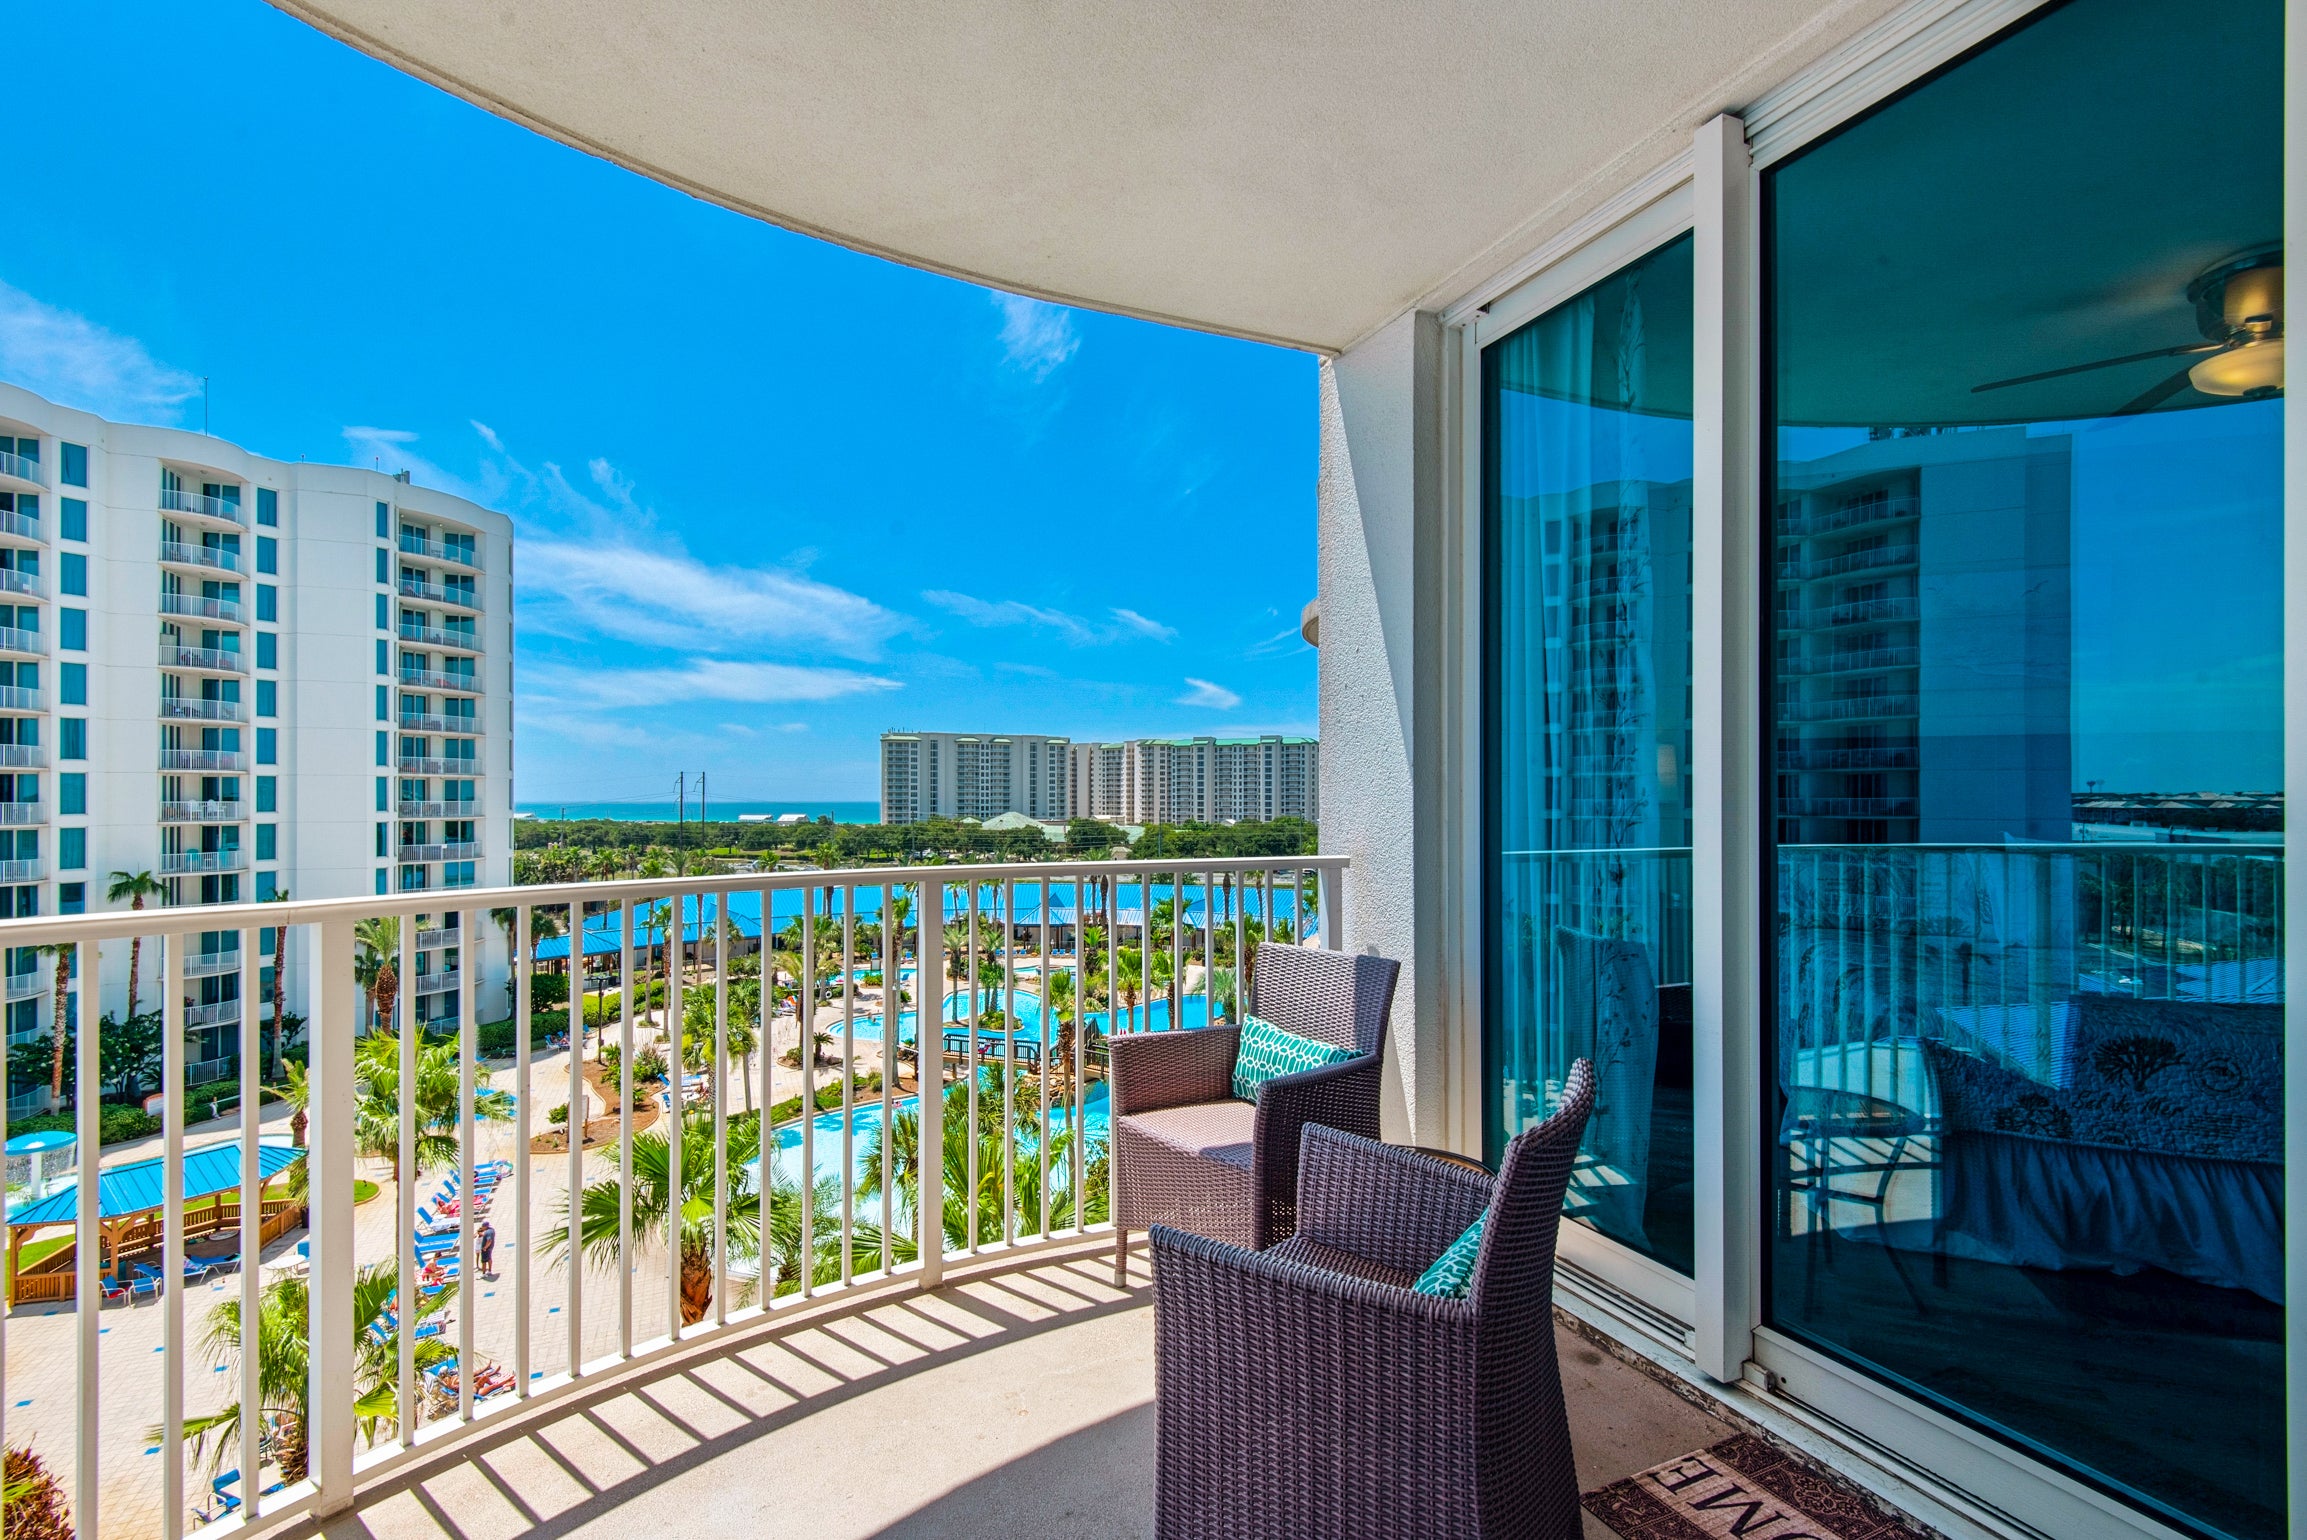 Palms Resort #2605 balcony views